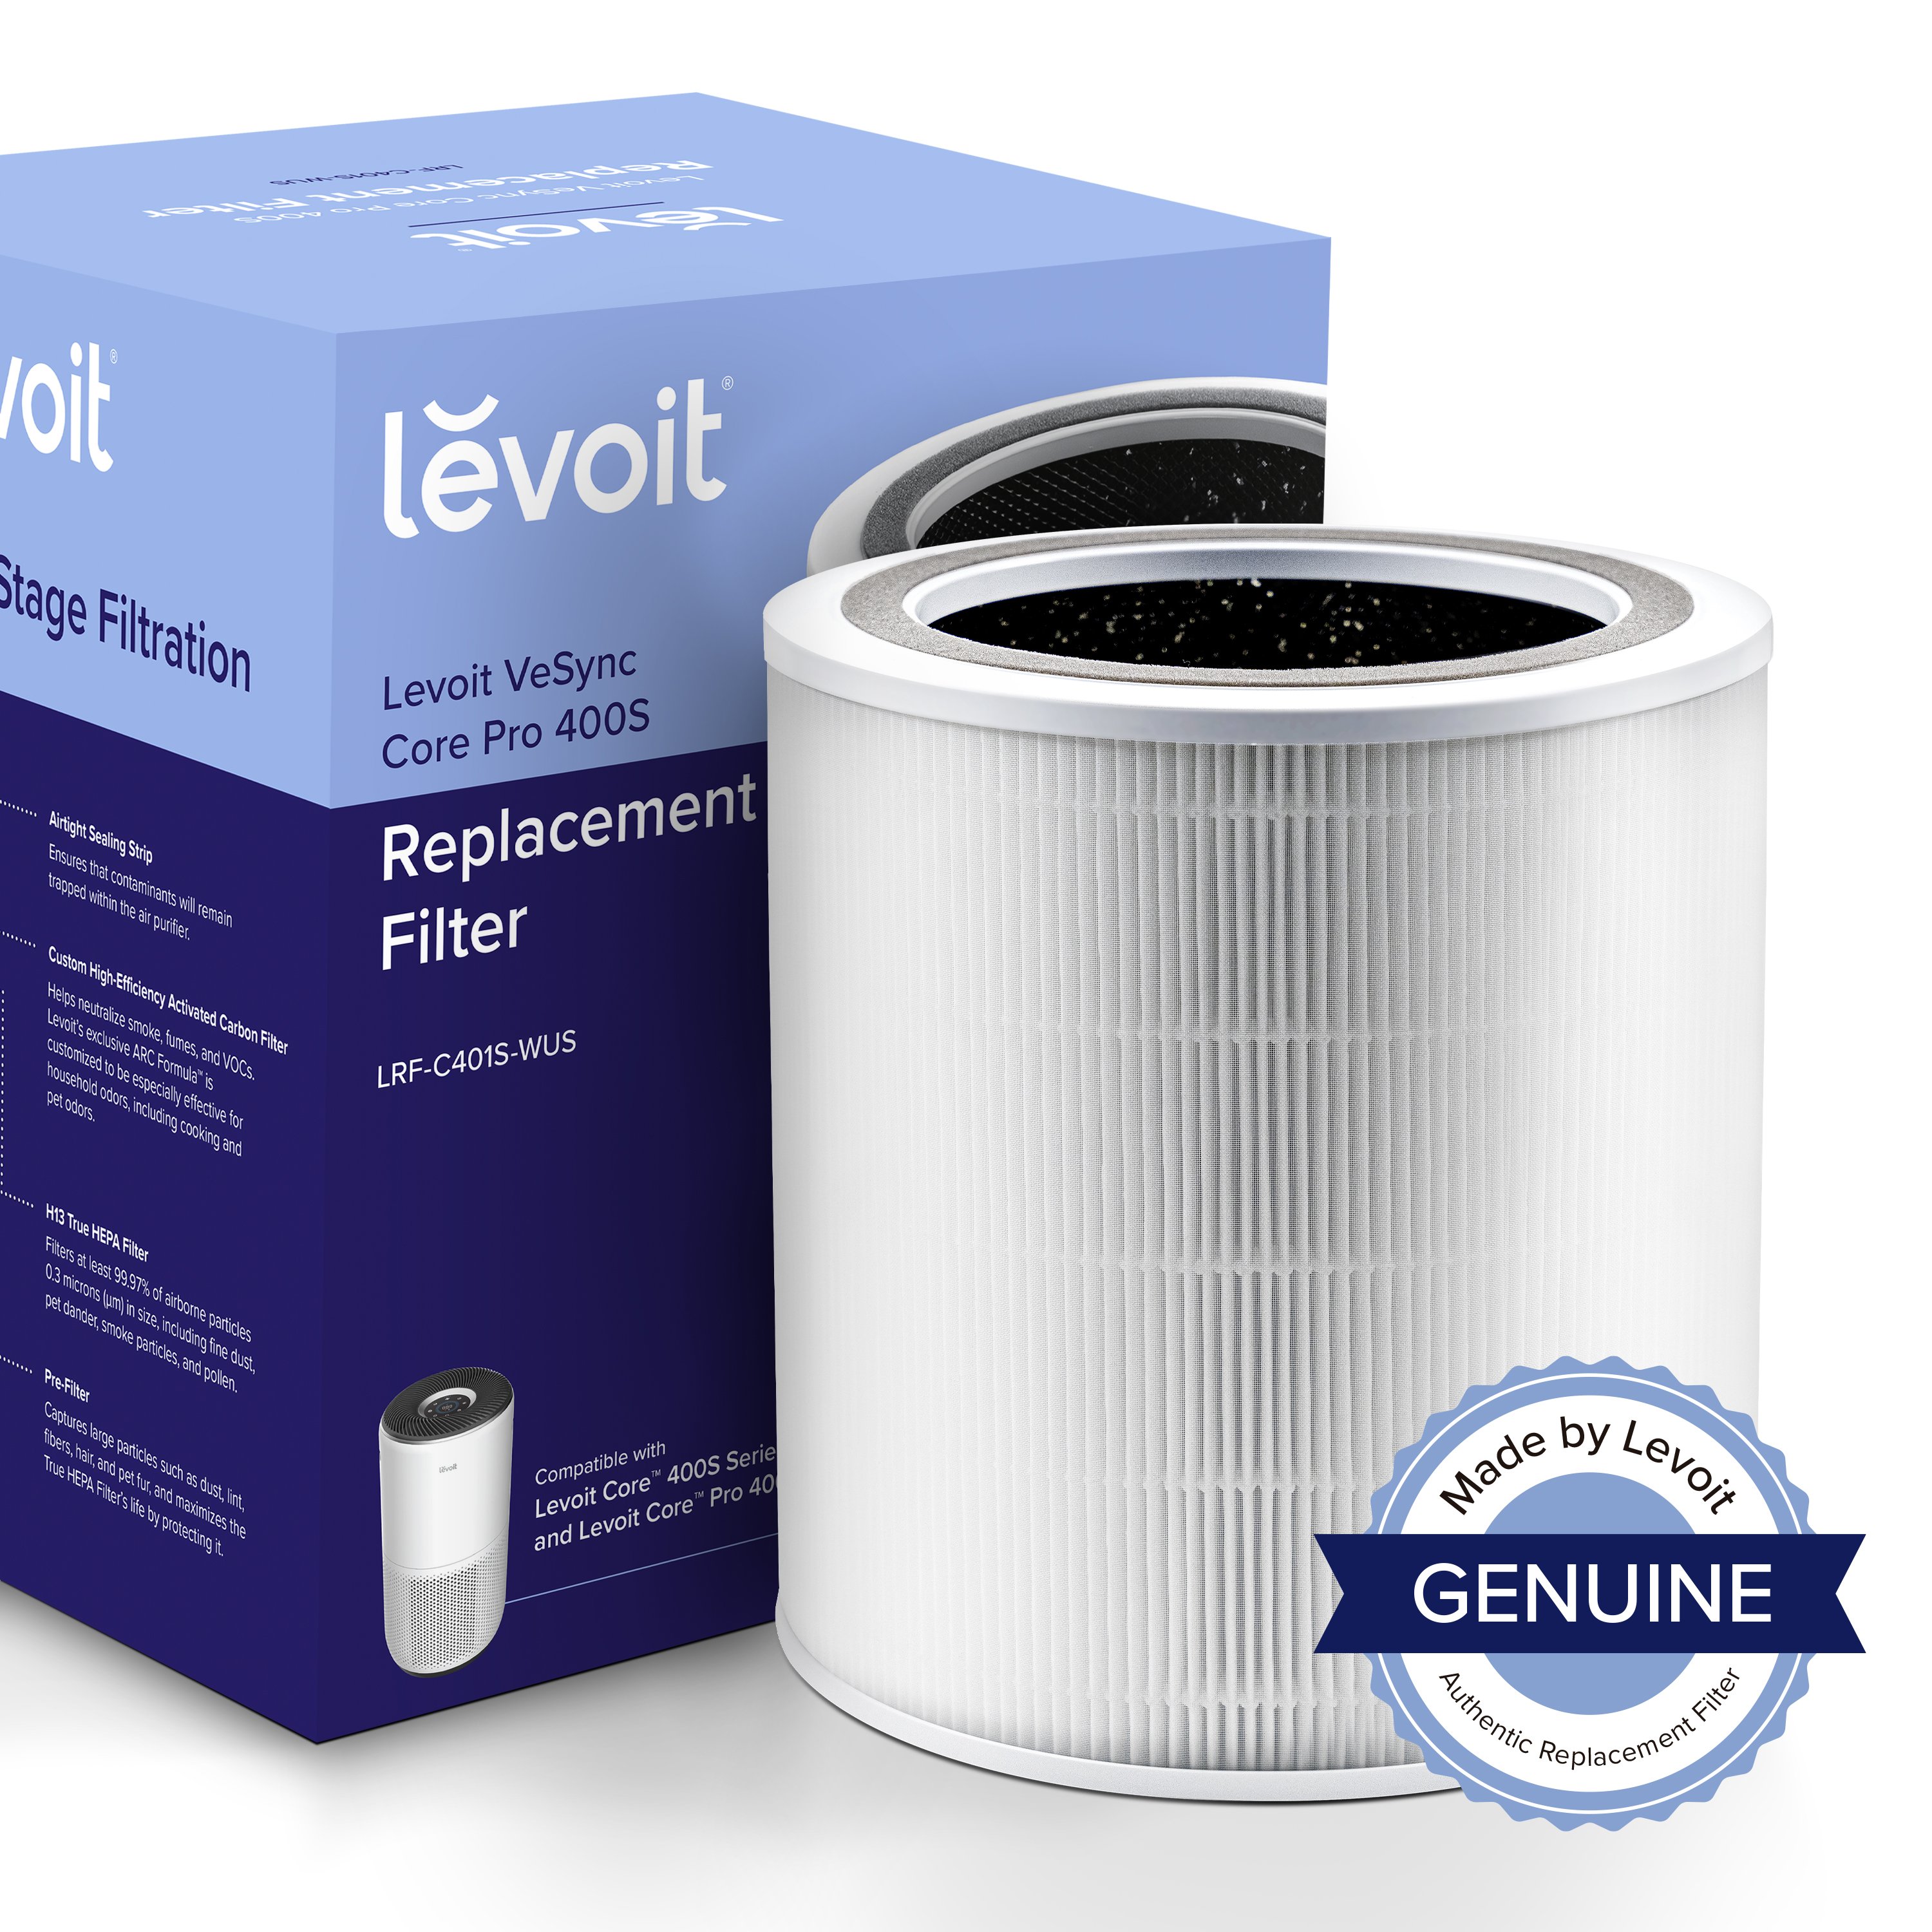 Фильтр Levoit Air Cleaner Filter Core 400S True HEPA 3-Stage